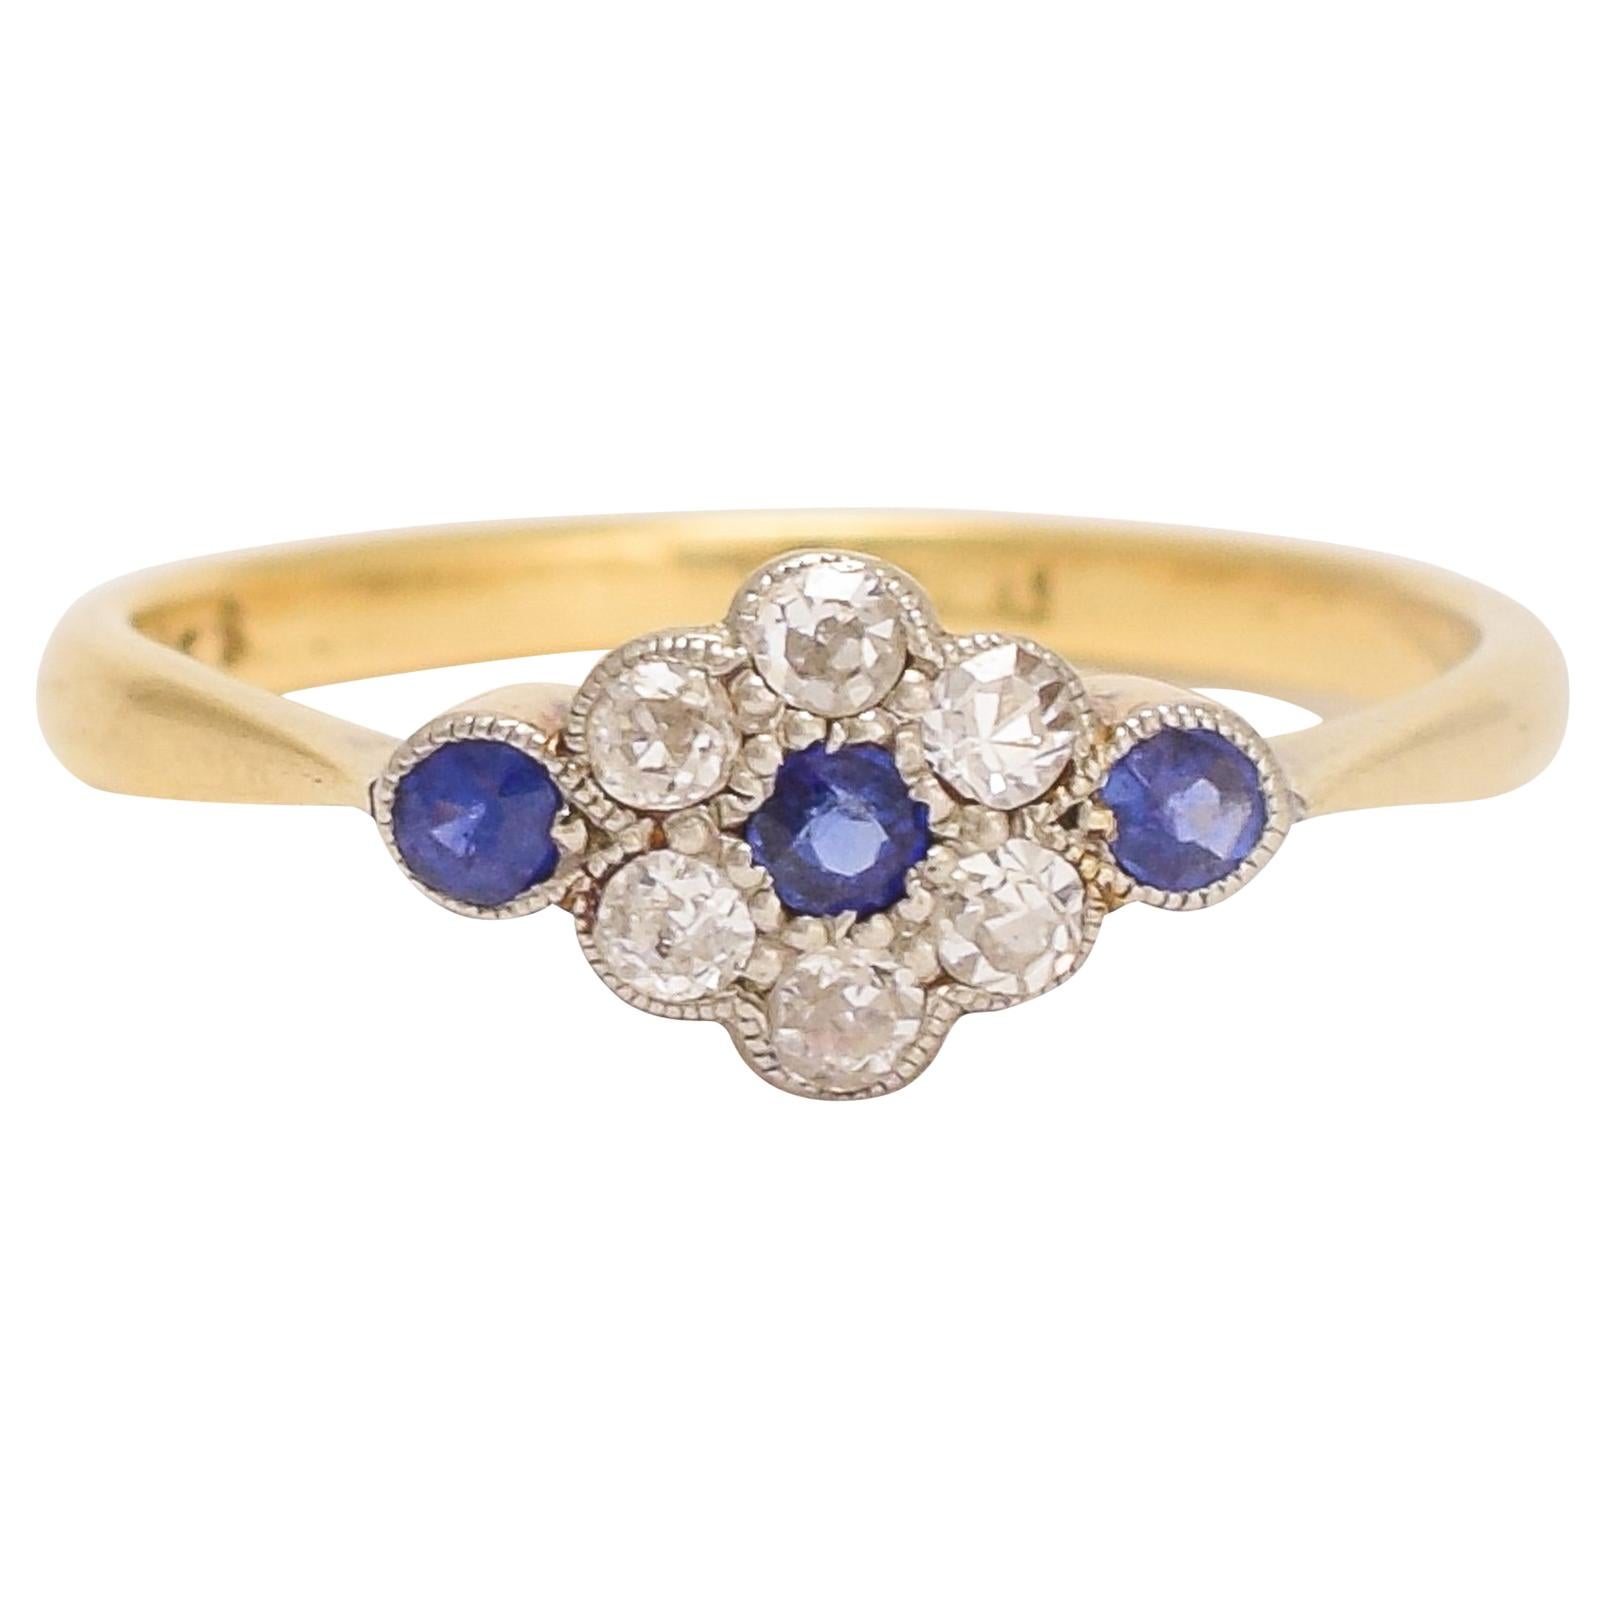 Antique Edwardian Sapphire Diamond Daisy Ring